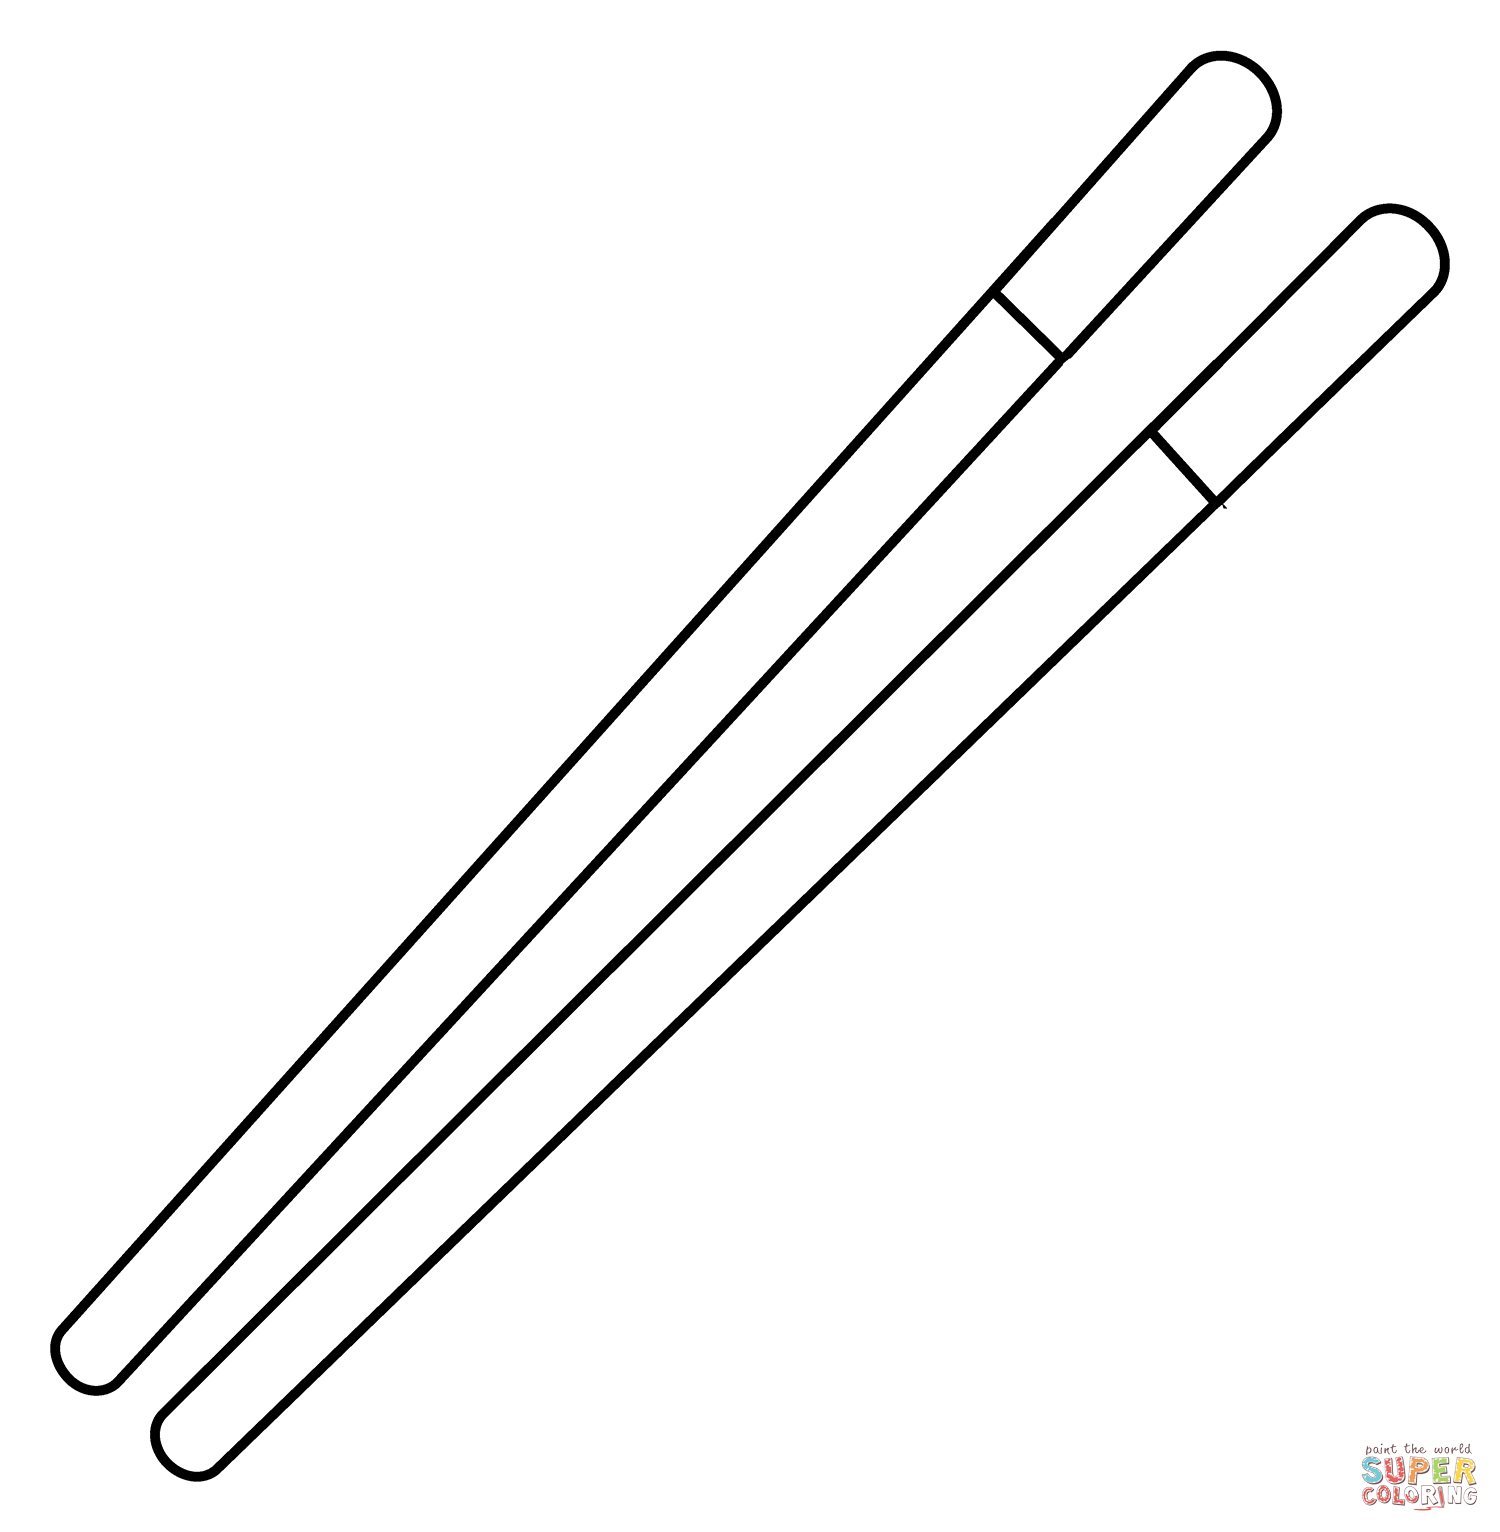 Chopsticks emoji coloring page free printable coloring pages